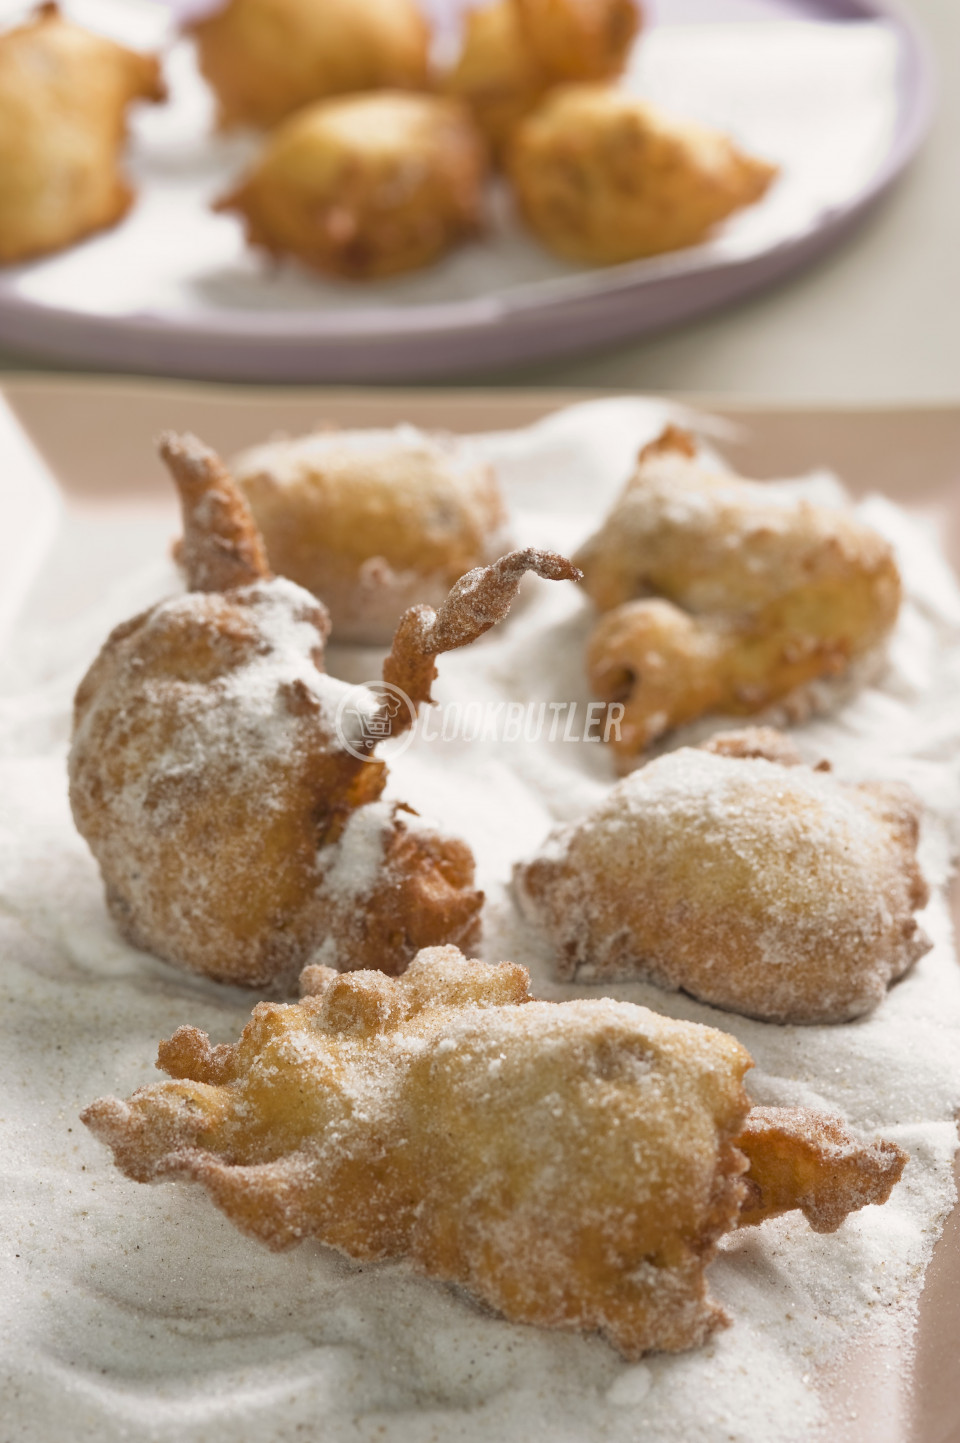 Fritole veneziane (yeast doughnuts, Italy) | preview